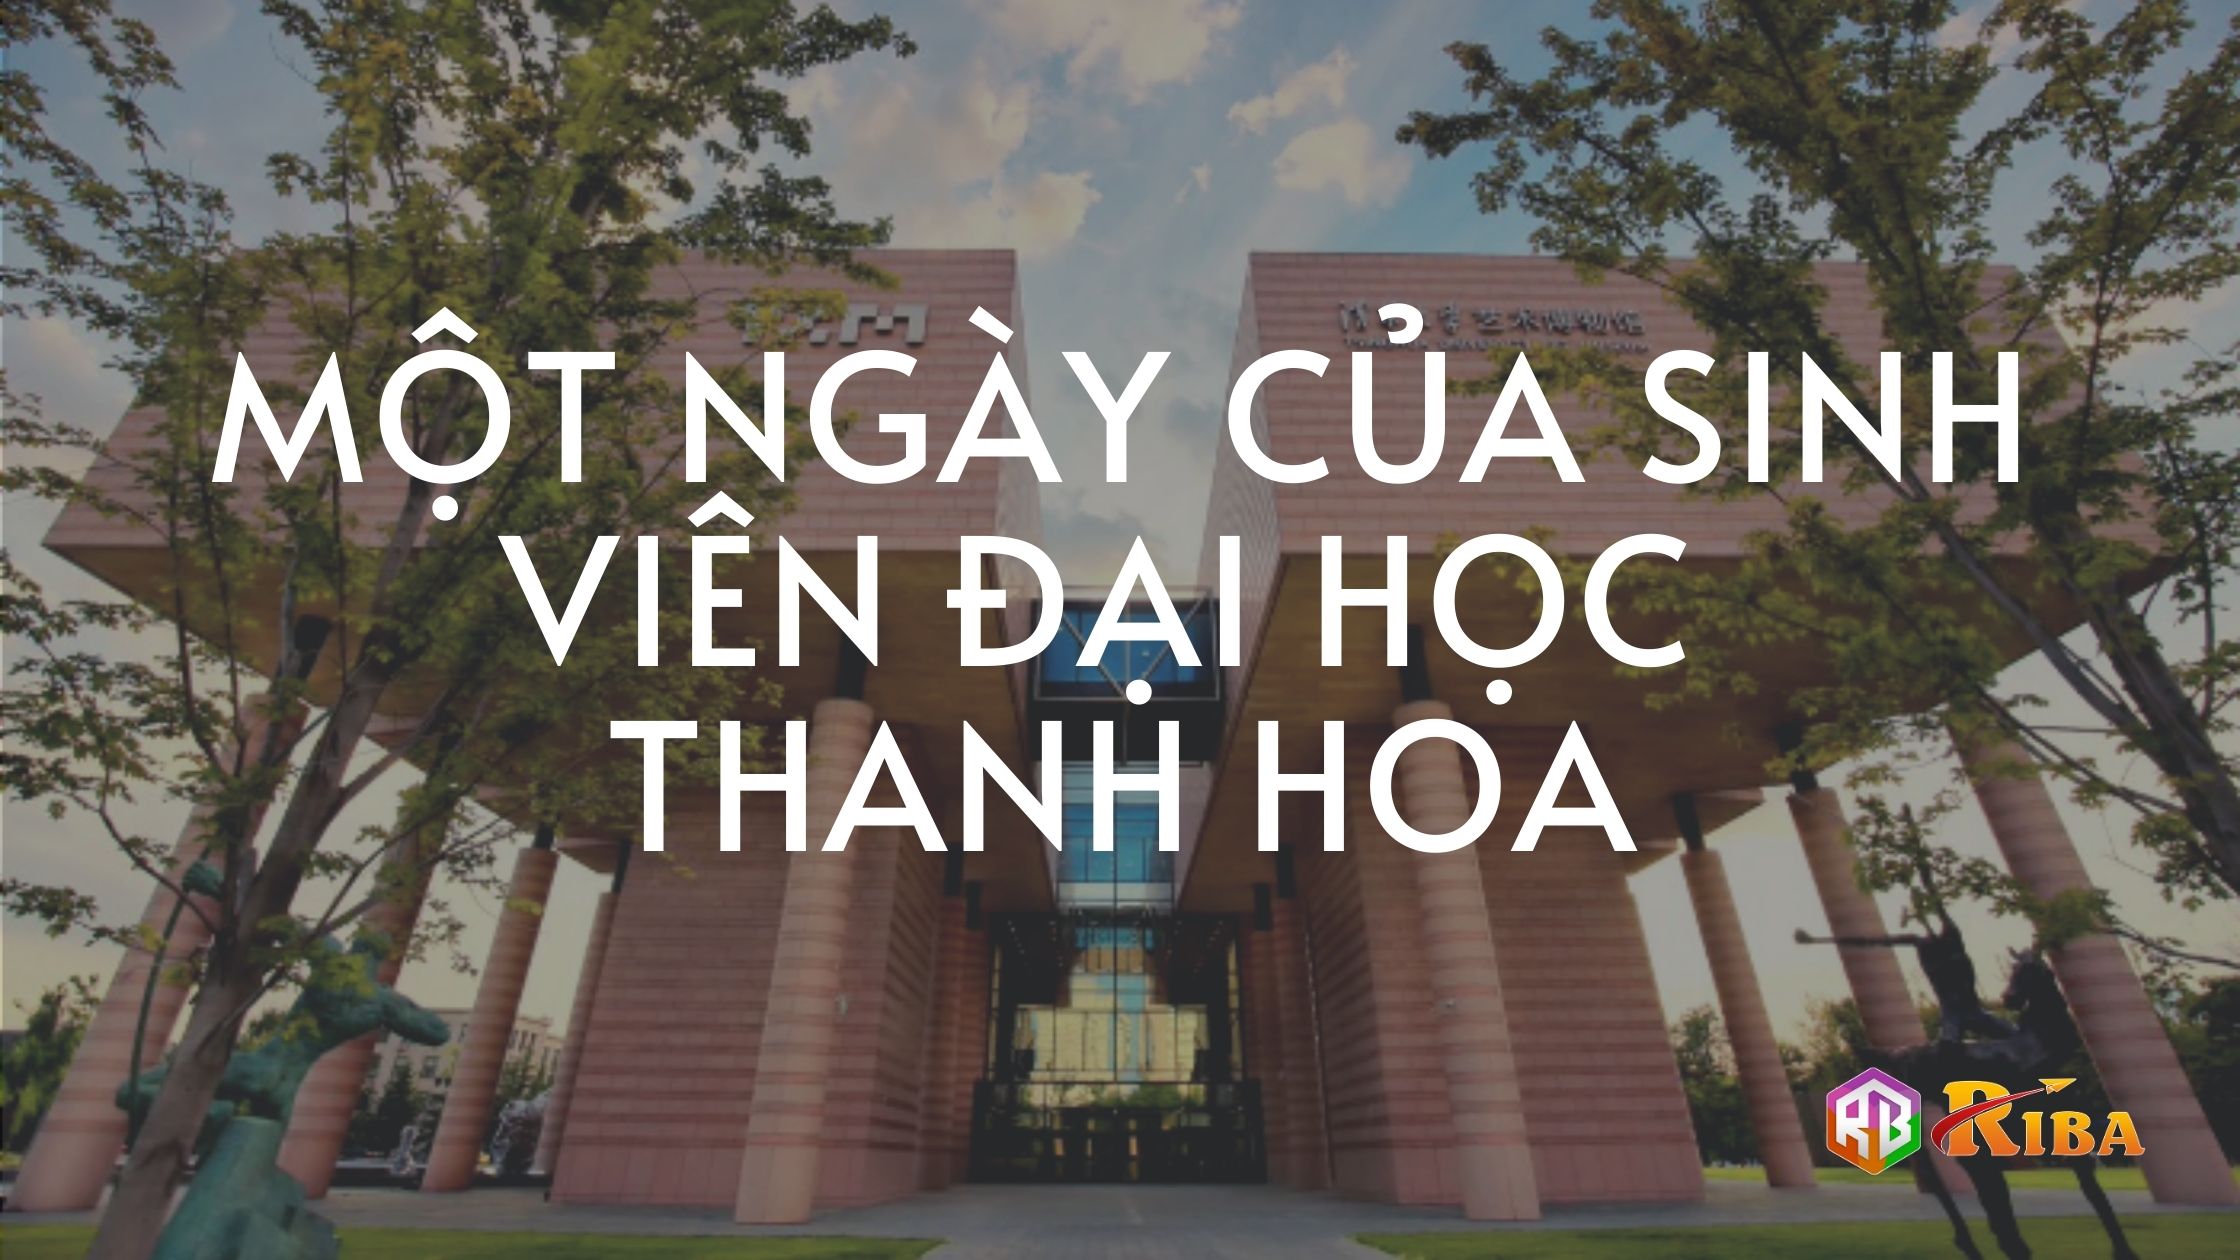 Mot Ngay Cua Sinh Vien Dai Hoc Thanh Hoa 2022